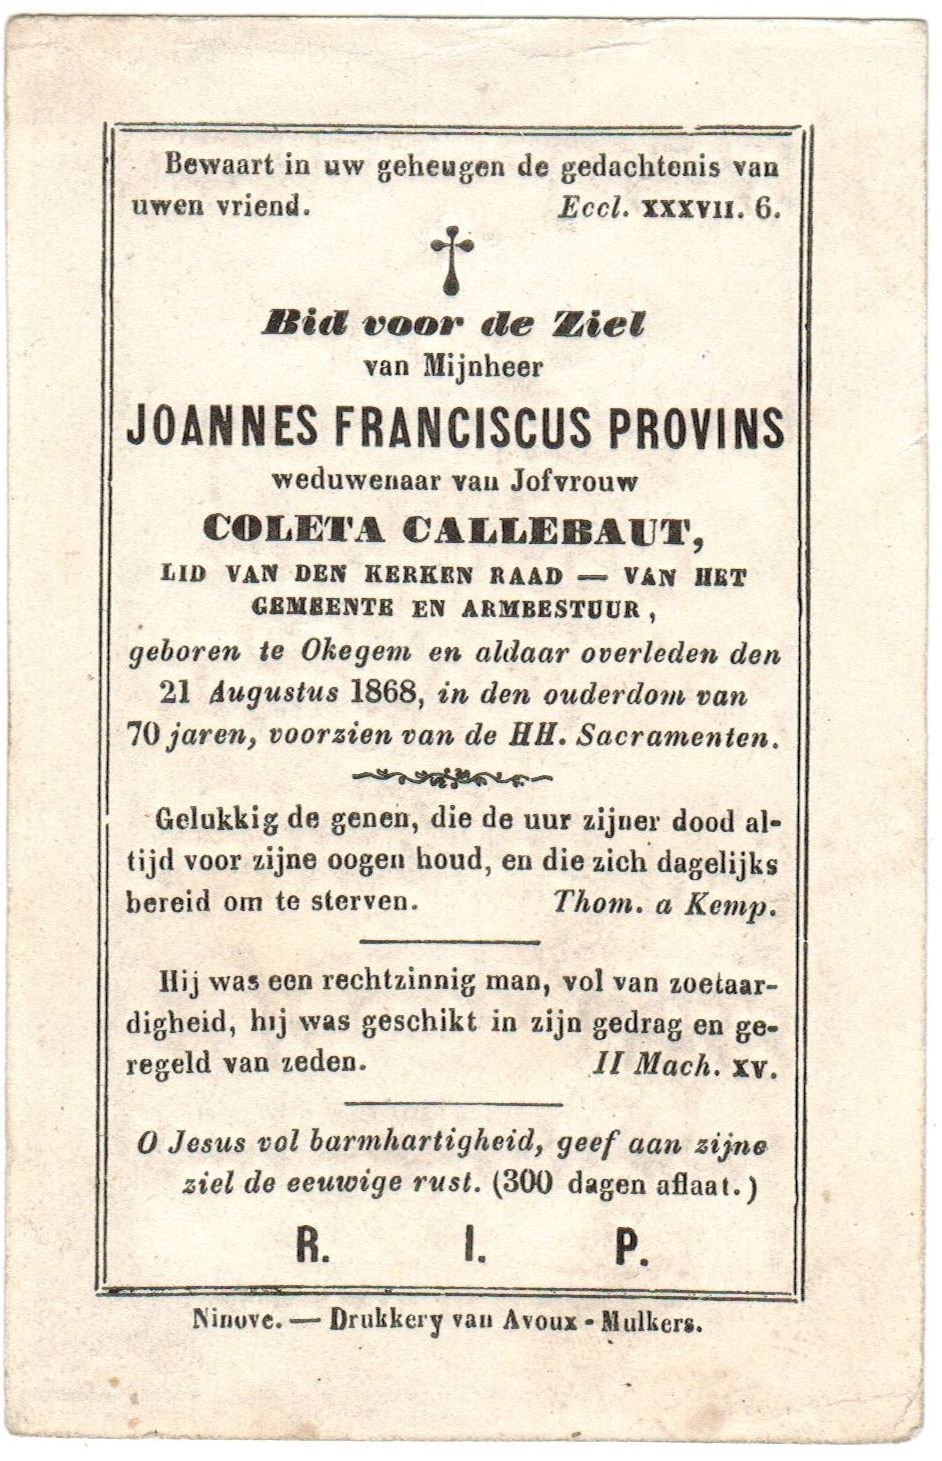 Provins Joannes Franciscus